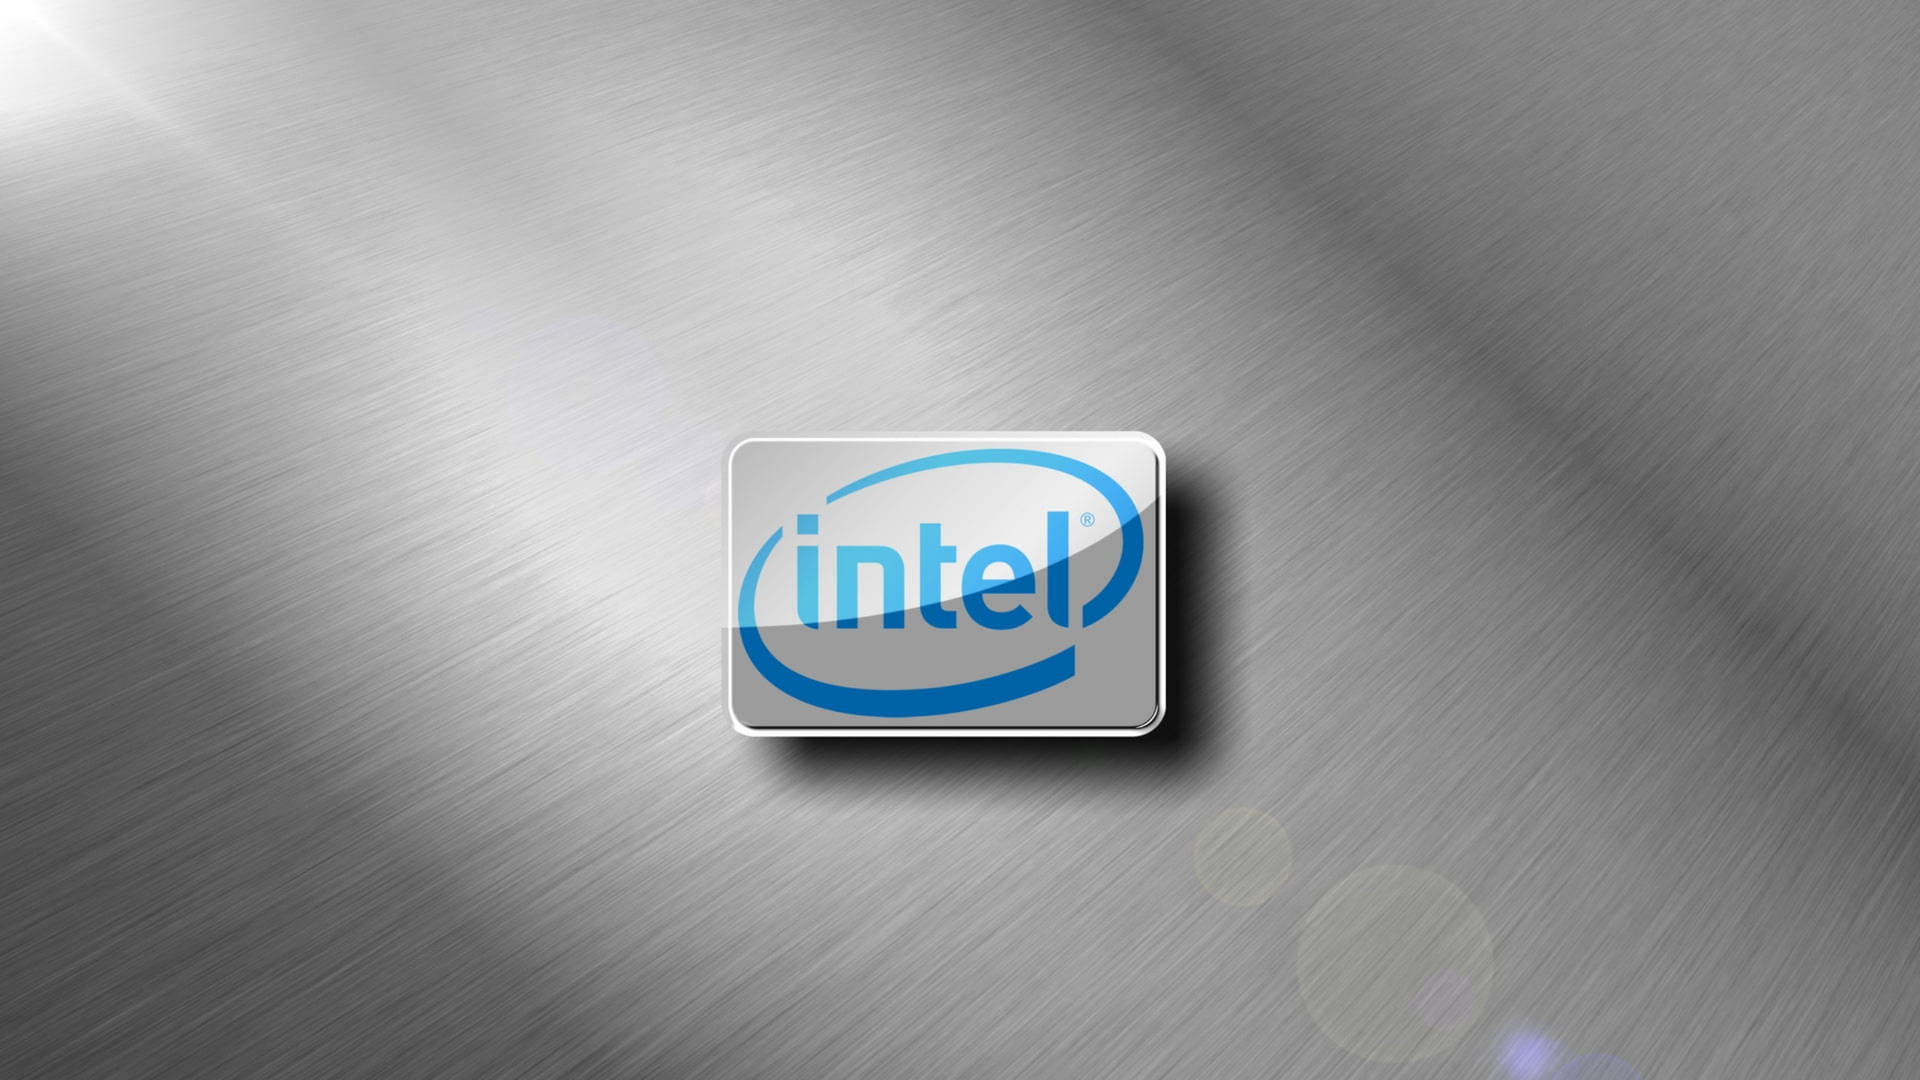 Intel Logo In Metallic Silver